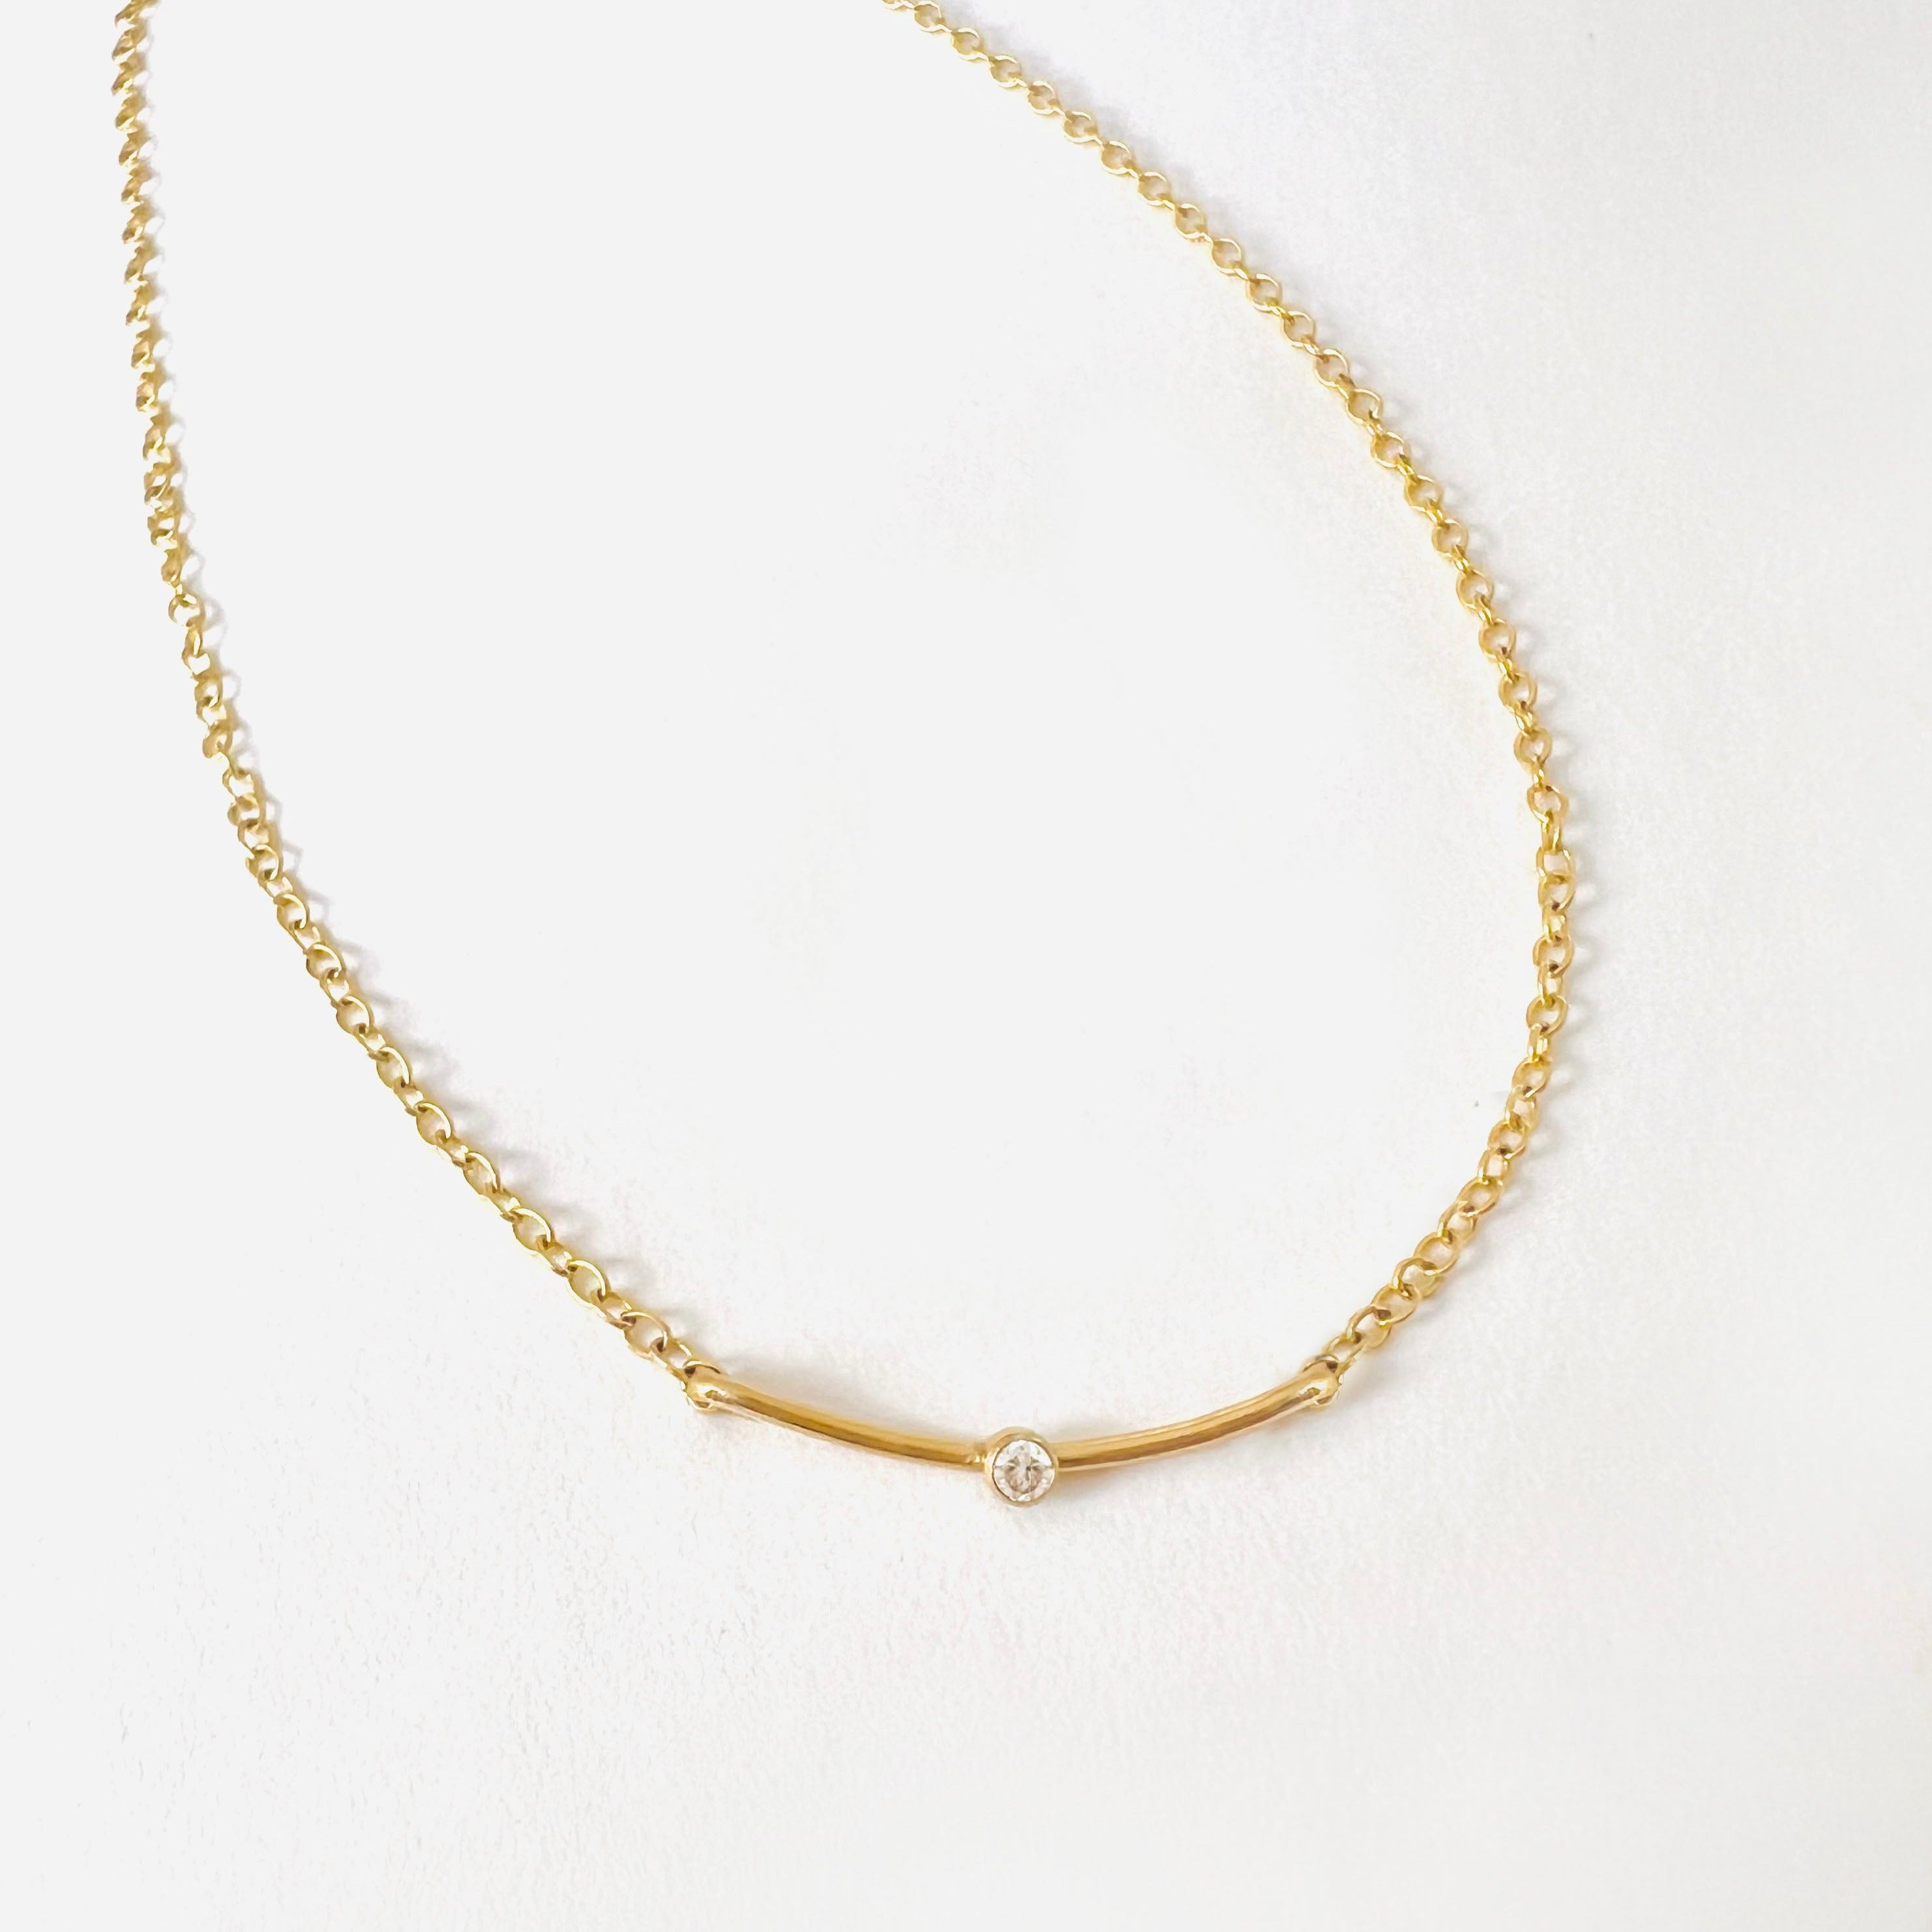 Tiny white topaz gemstone necklace. Curved bar style gold pendant.